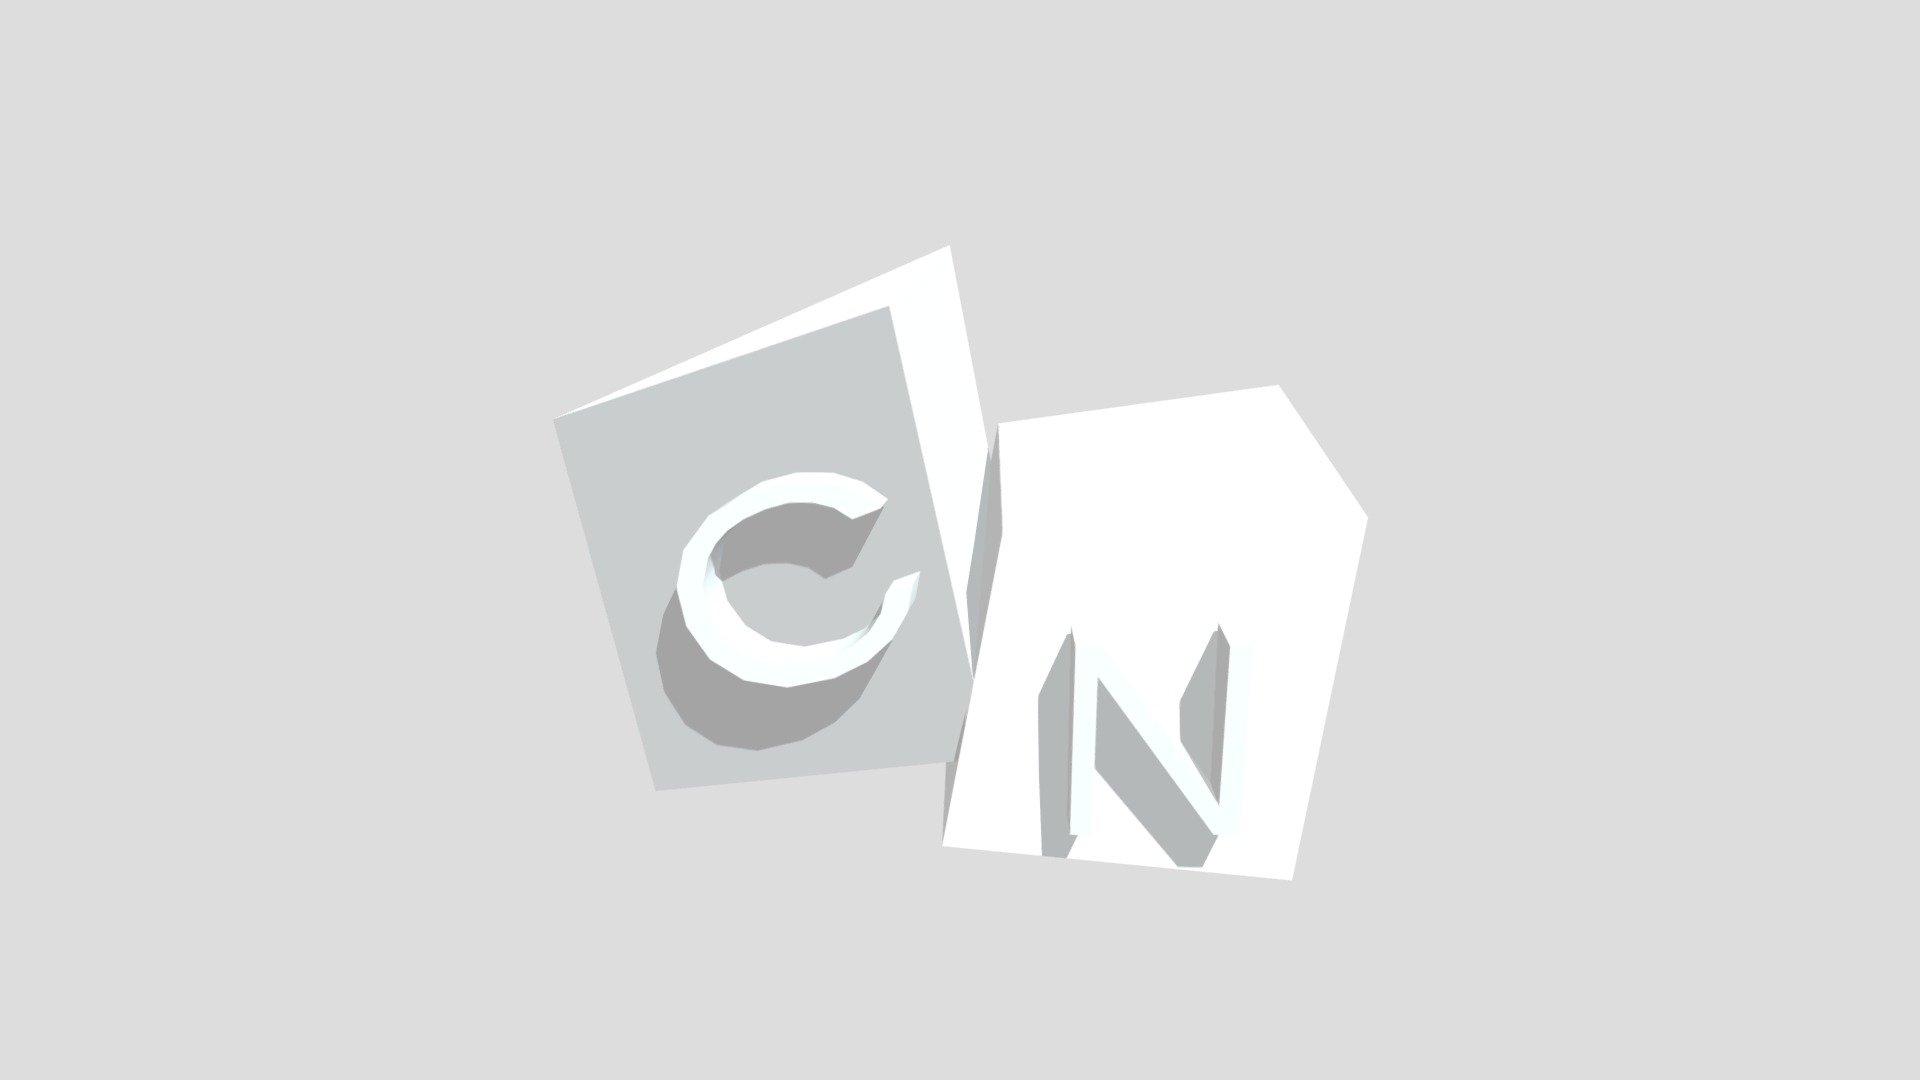 Cartoon Network Logo by AriG44, Download free STL model